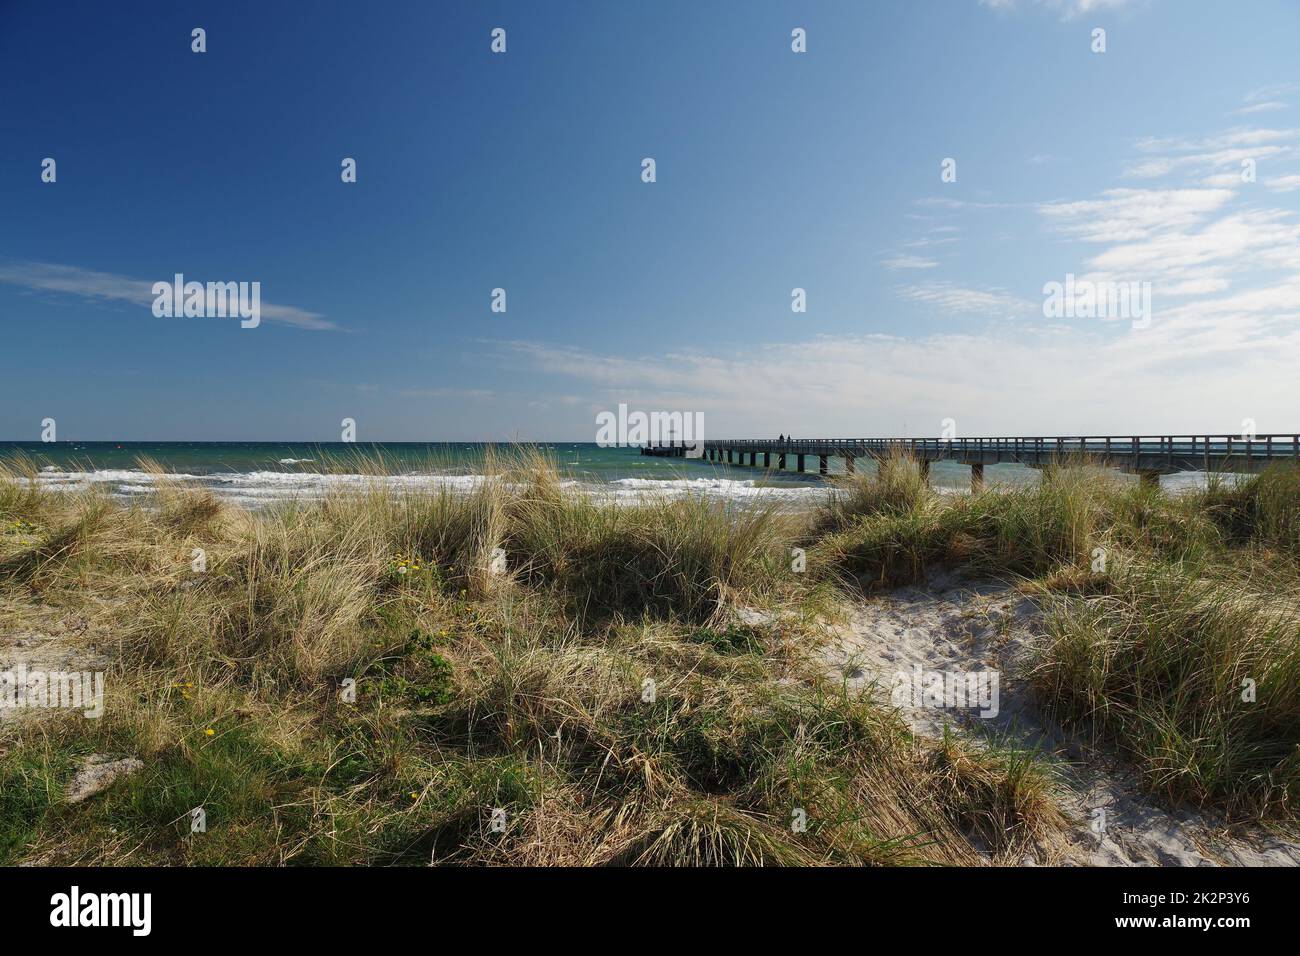 Dunes, plage, mer baltique et pont de mer, Schönberger Strand, Schönberg, Schleswig-Holstein, Allemagne du Nord Banque D'Images